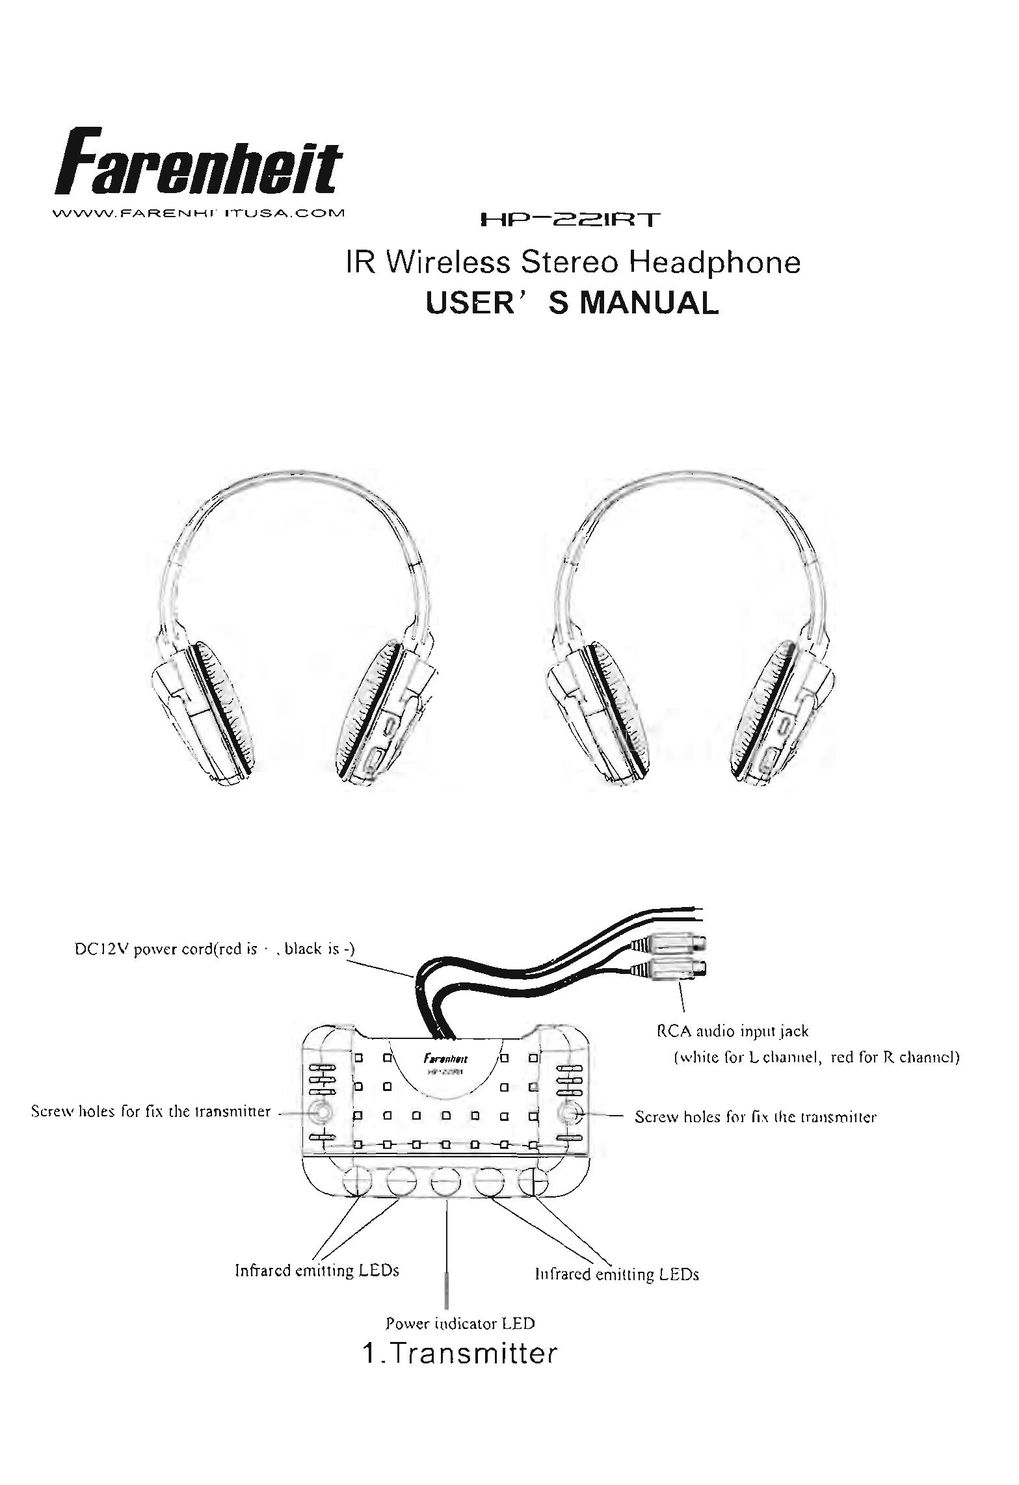 Farenheit Technologies HP-22IRT Headphones User Manual